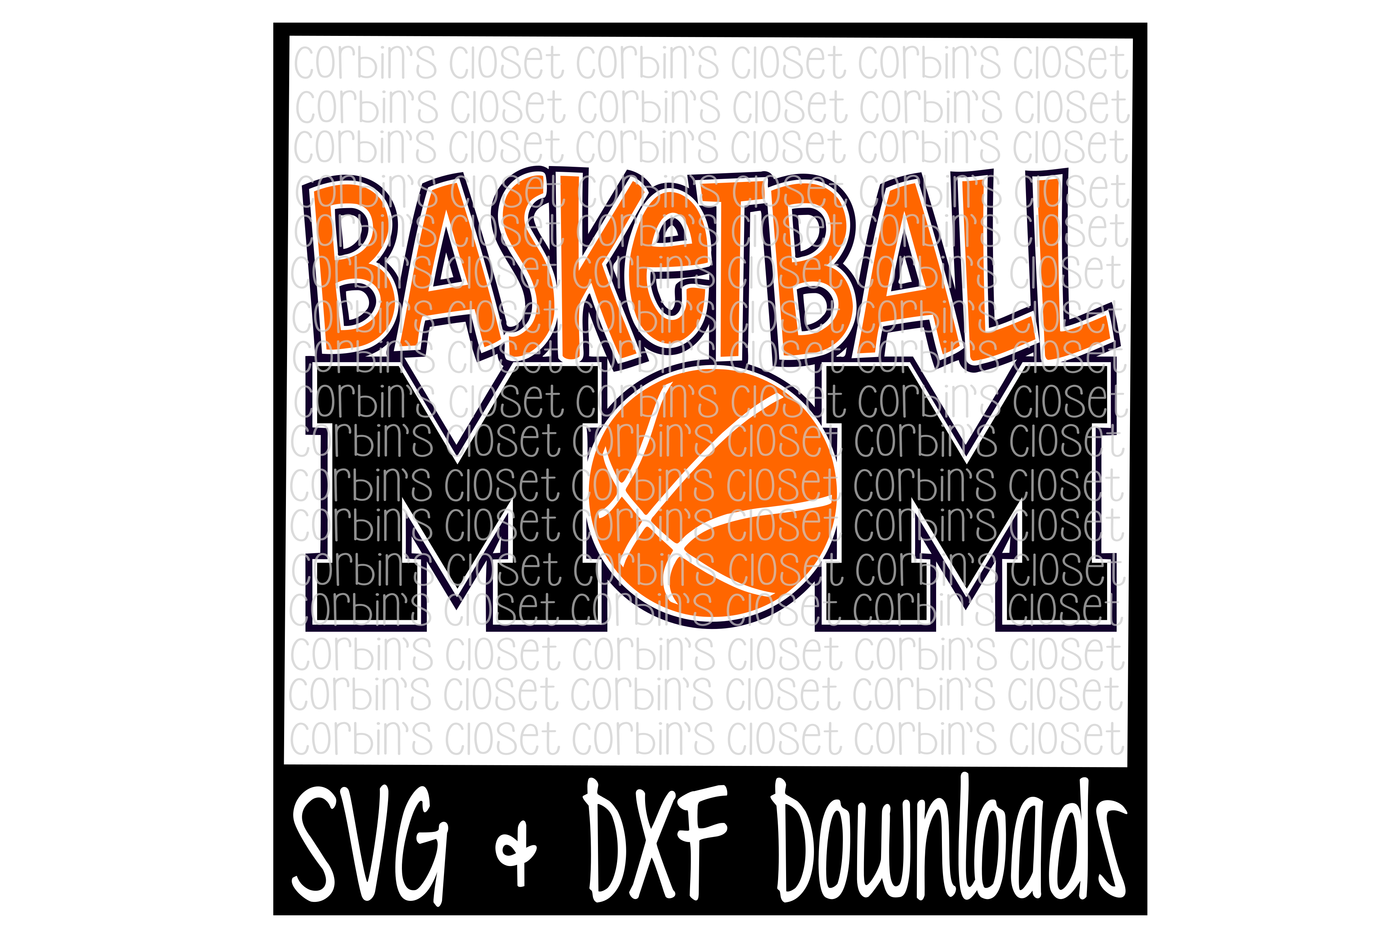 basketball mom svg free